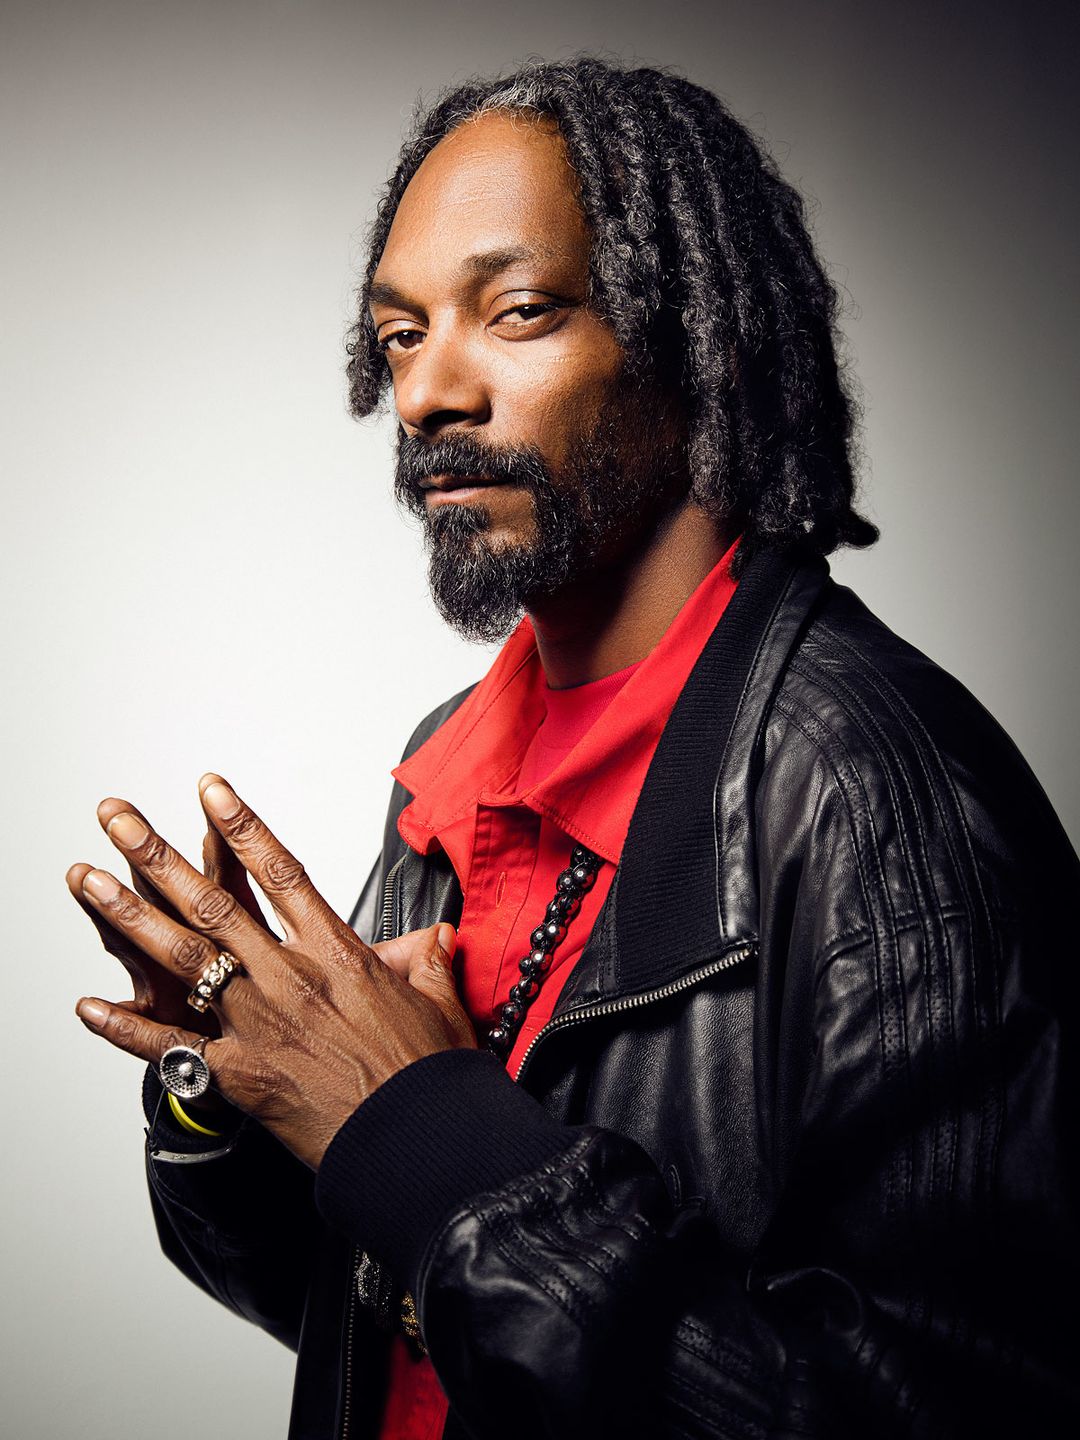 Snoop Dogg ethnicity